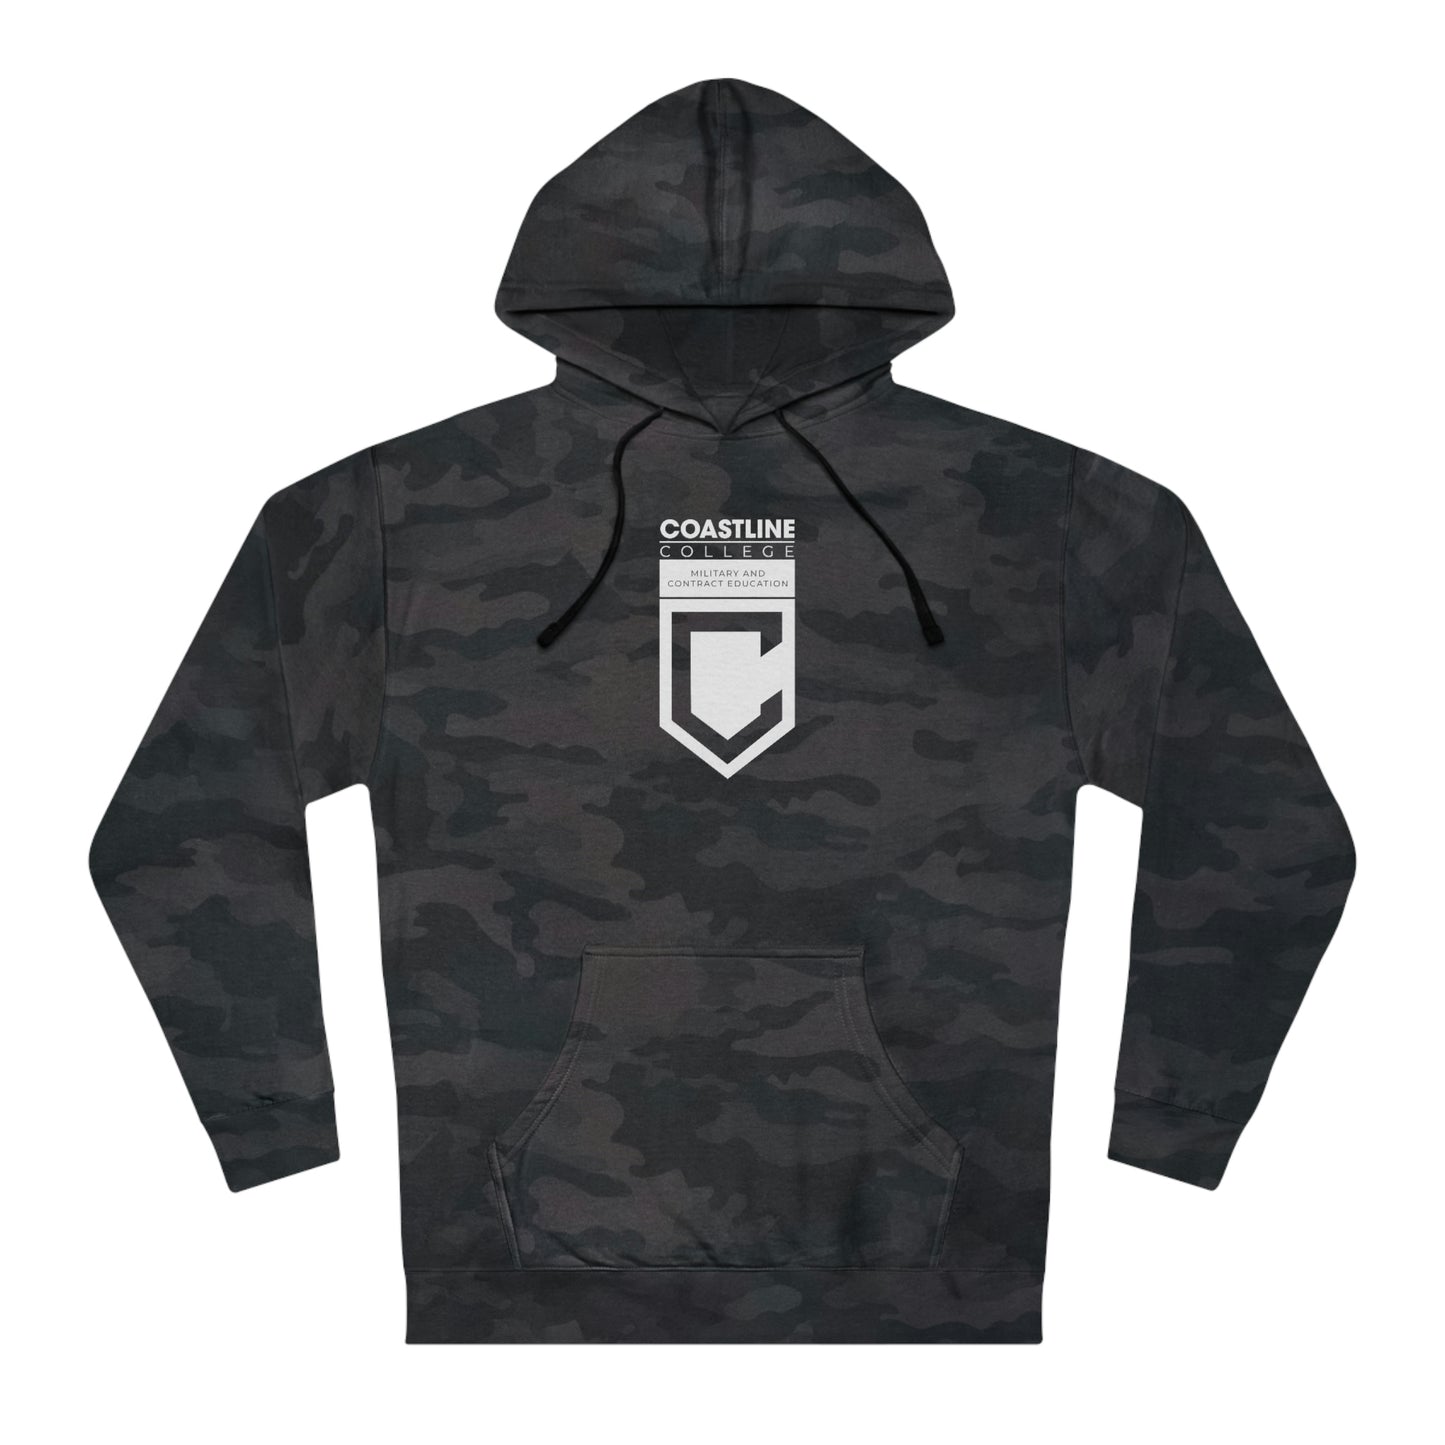 Coastline Military & Contract Ed Black Camo Unisex Hooded Sweatshirt